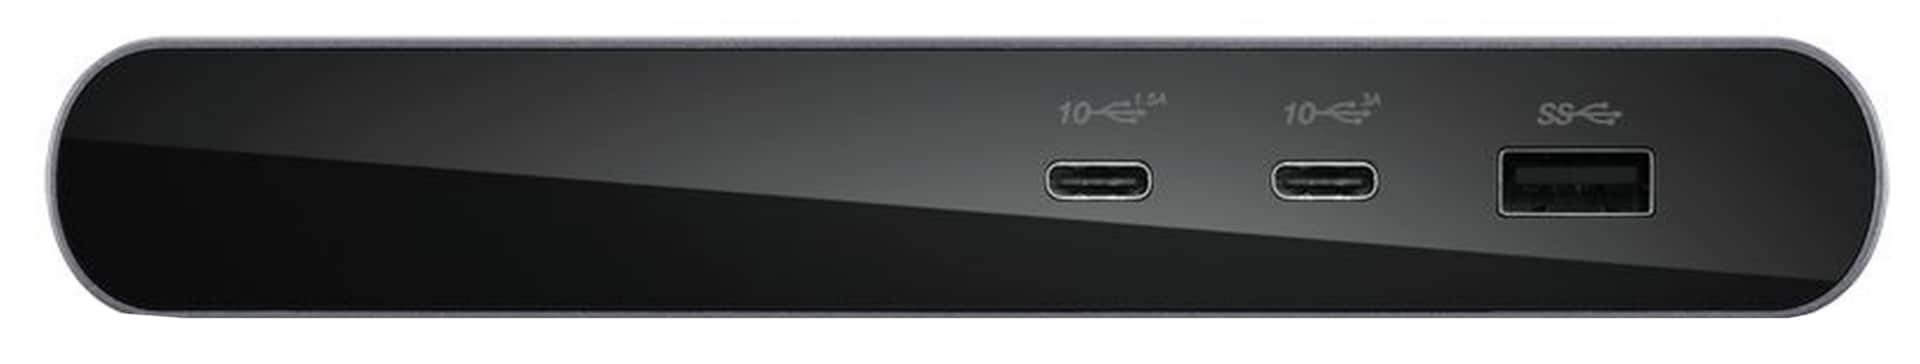 Lenovo USB-C Universal Business Docking Station